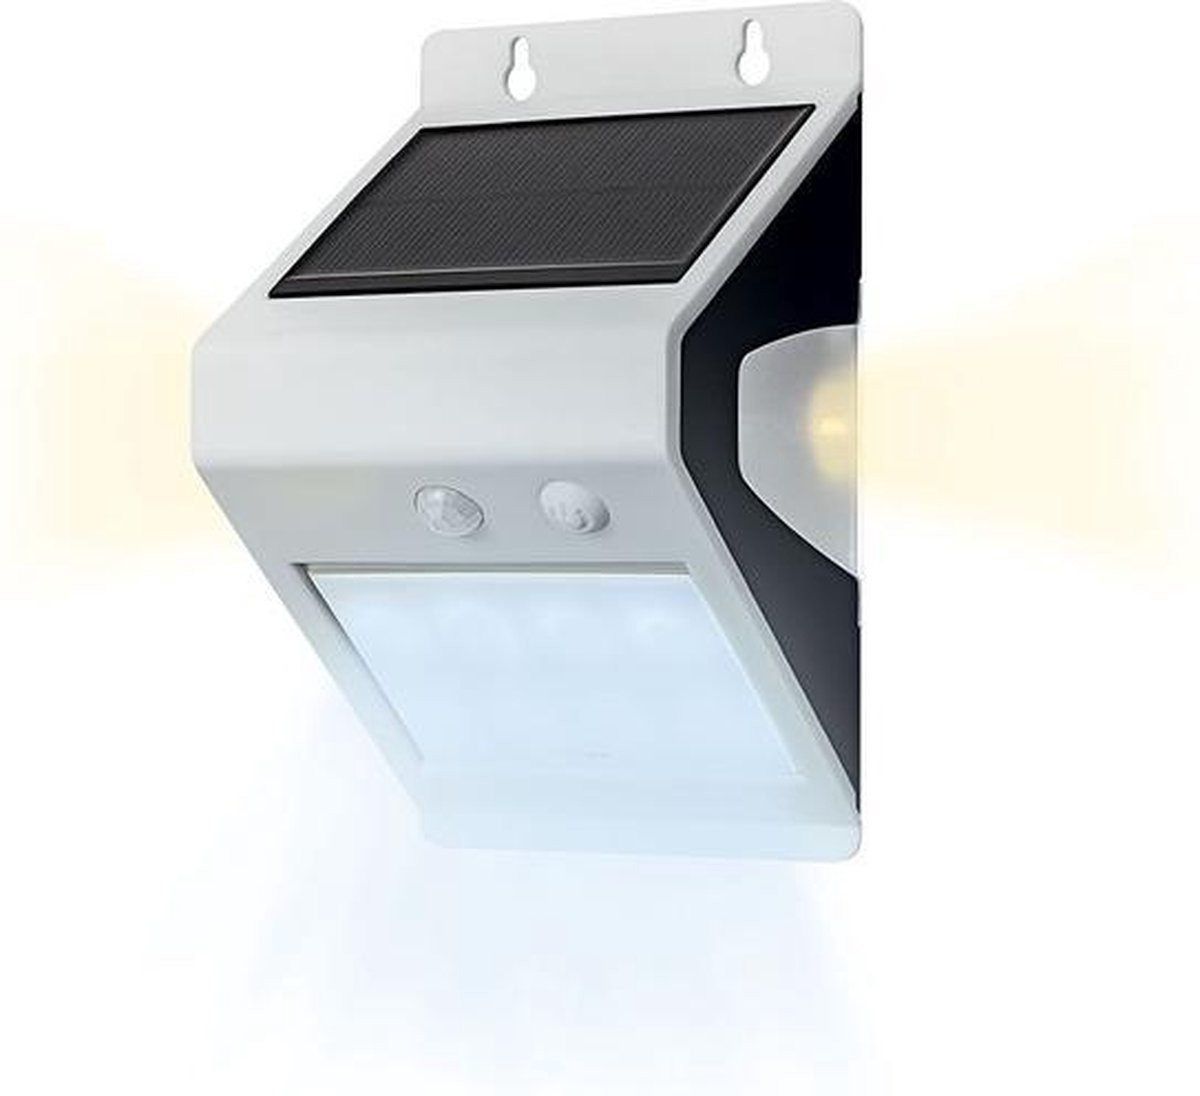 Solar LED-lamp met bewegingssensor - Zonne energie zonder kabel | bol.com